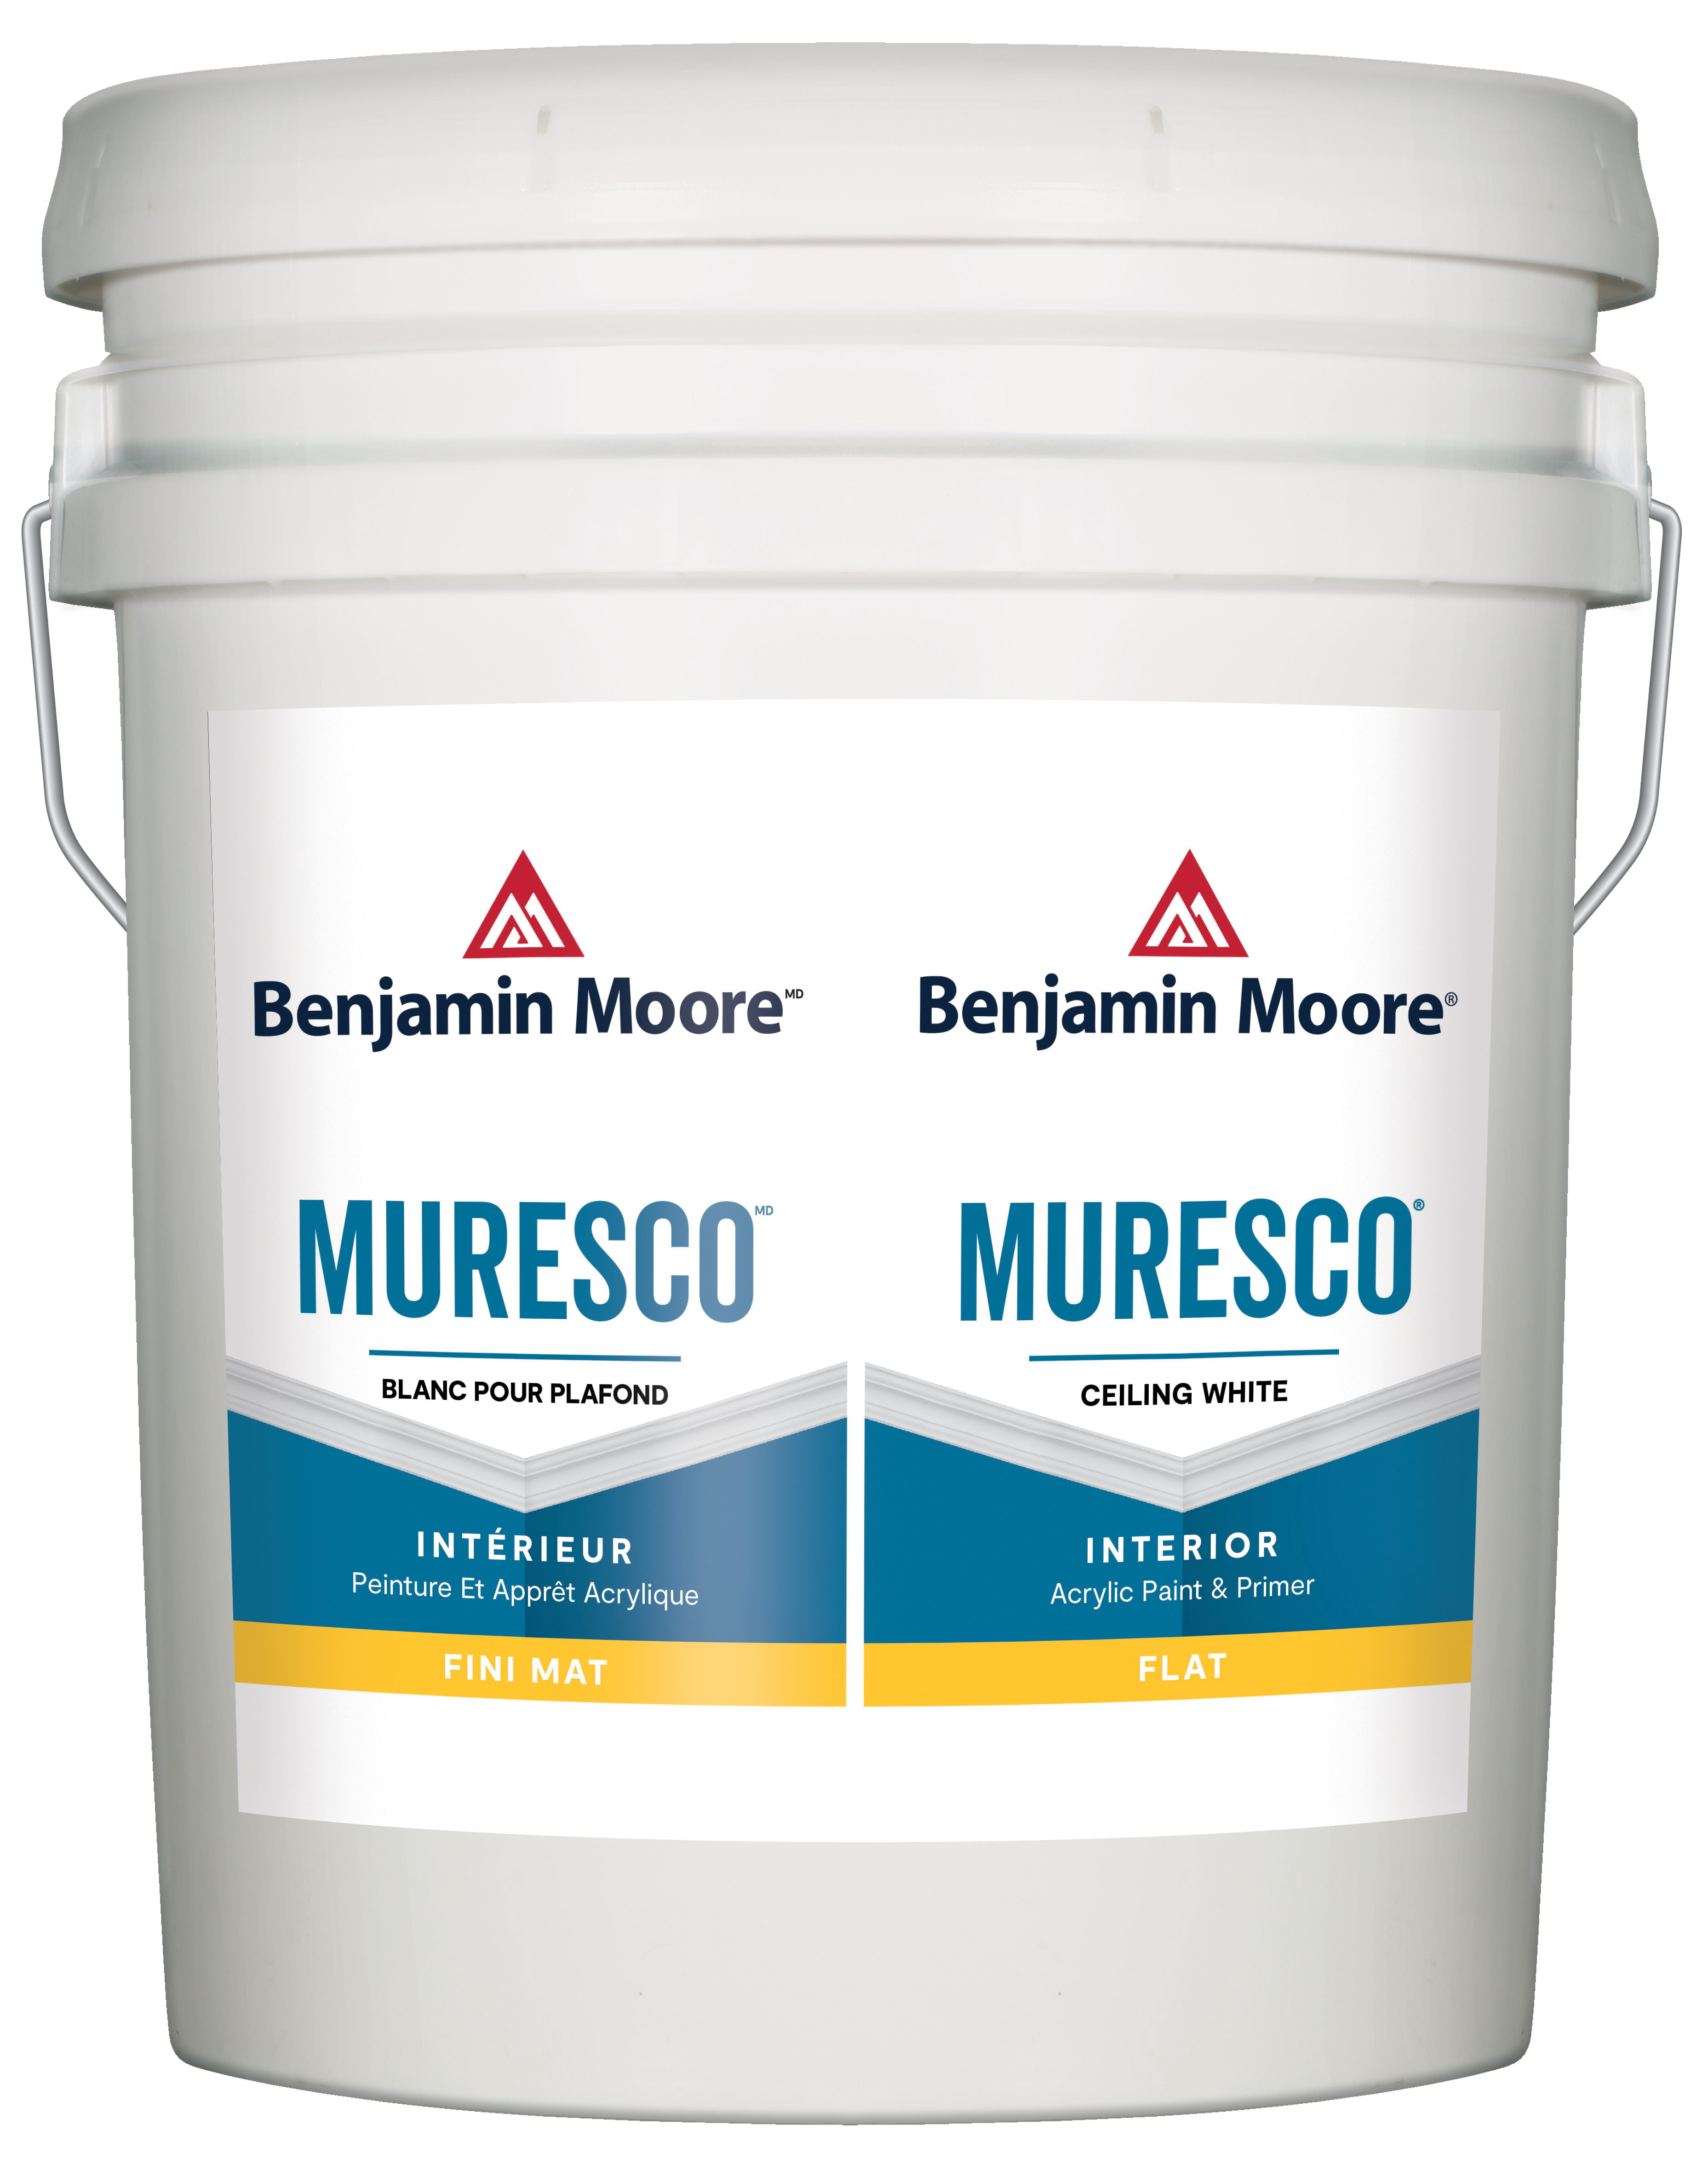 Muresco Premium Flat Acrylic Ceiling Paint - The Paint People